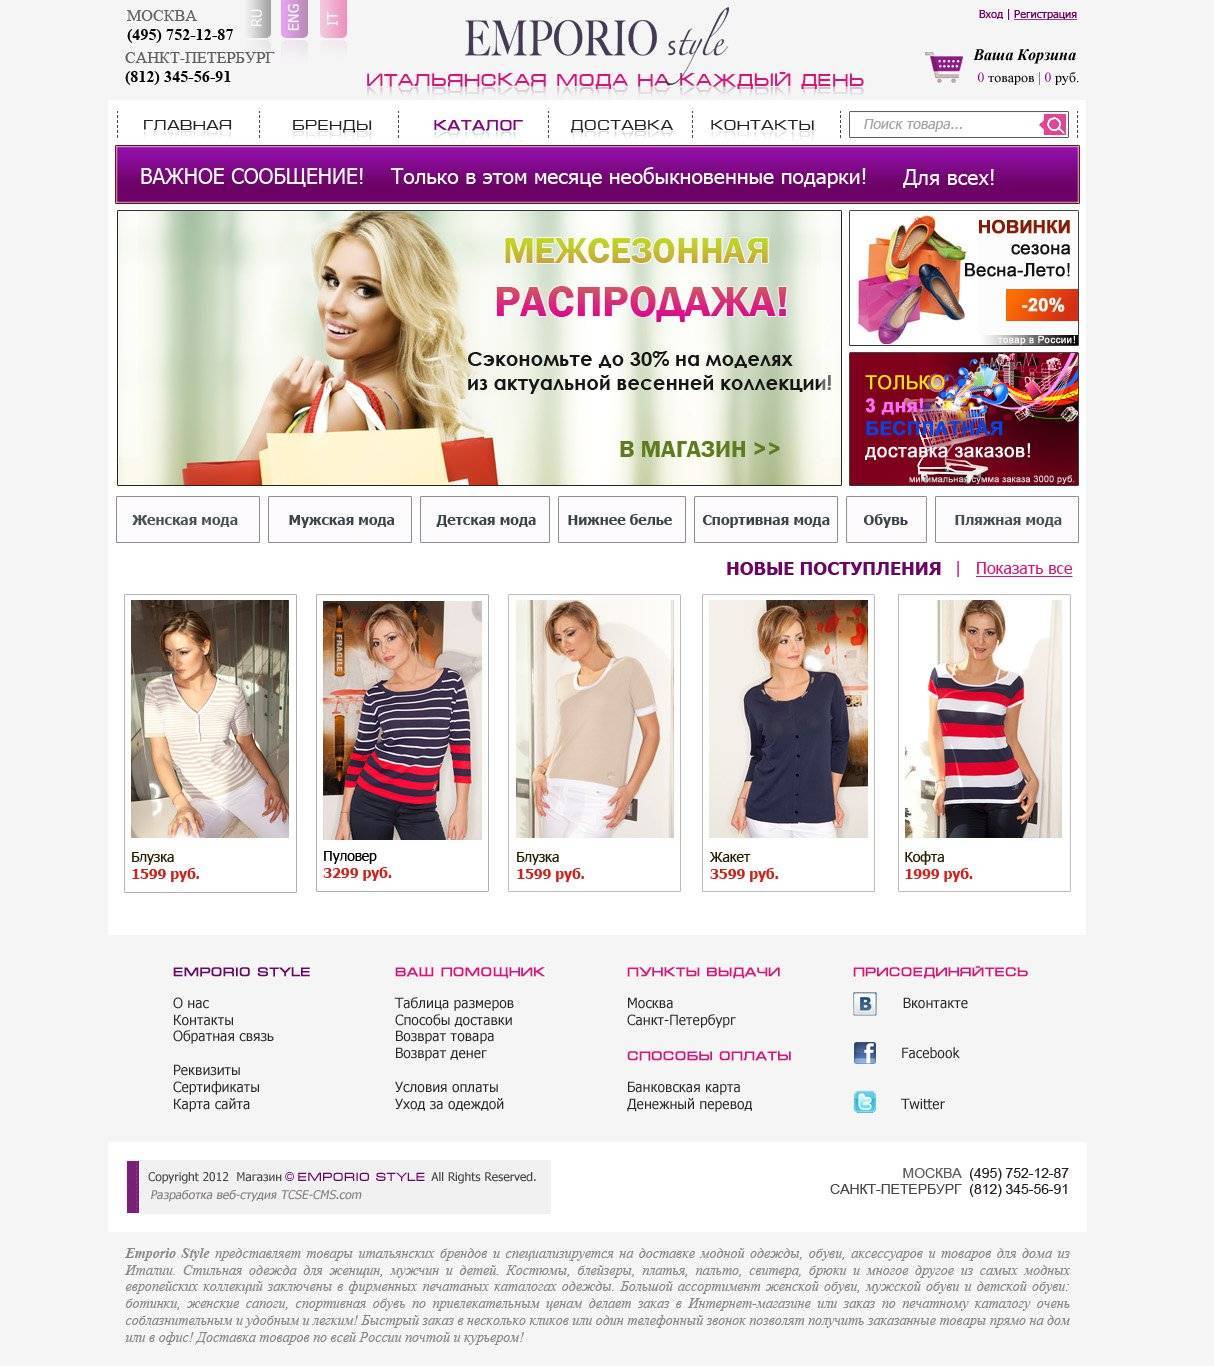 Сайт одежды com. Интернет магазин одежды. Сайты одежды. Сайты женской одежды. Российские интернет магазины одежды.